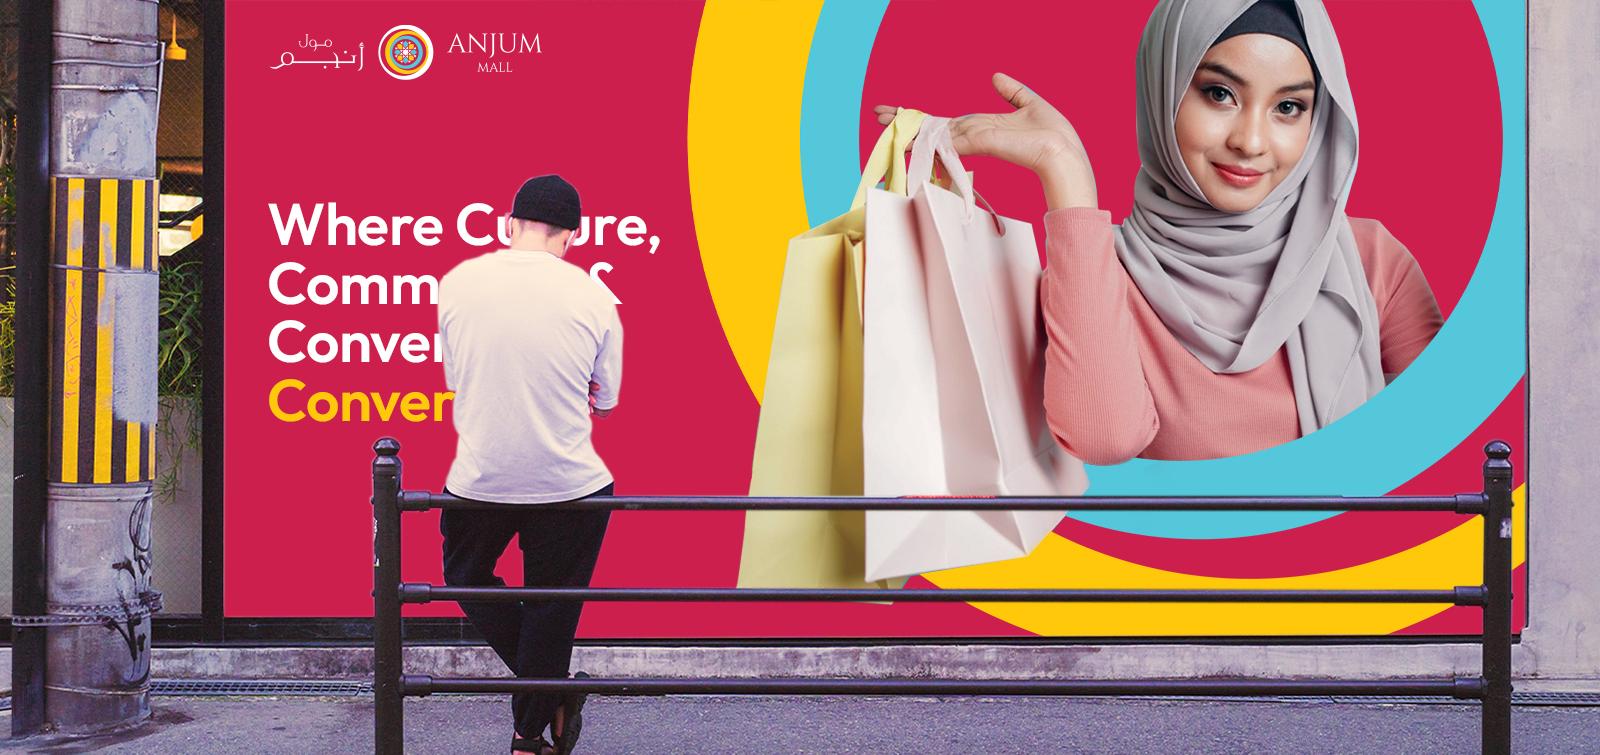 Anjum Mall idea